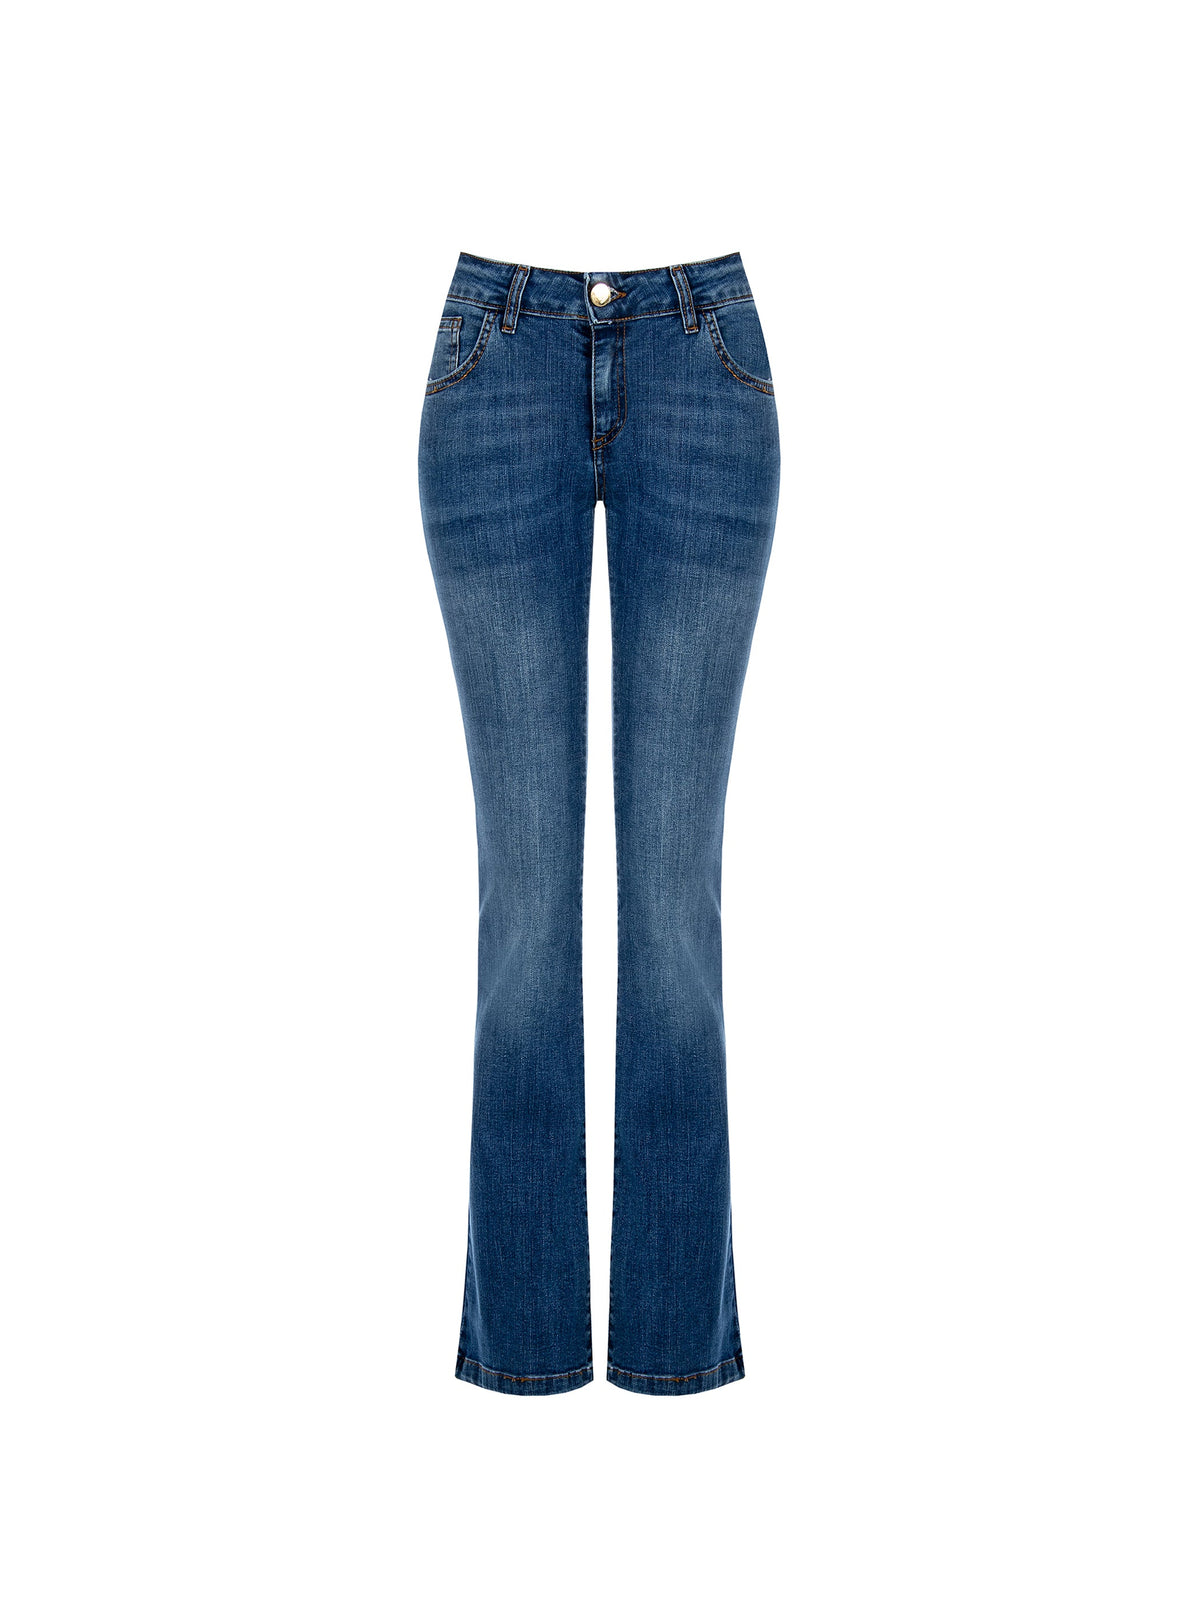 Flared Jeans with Rhinestone Pocket